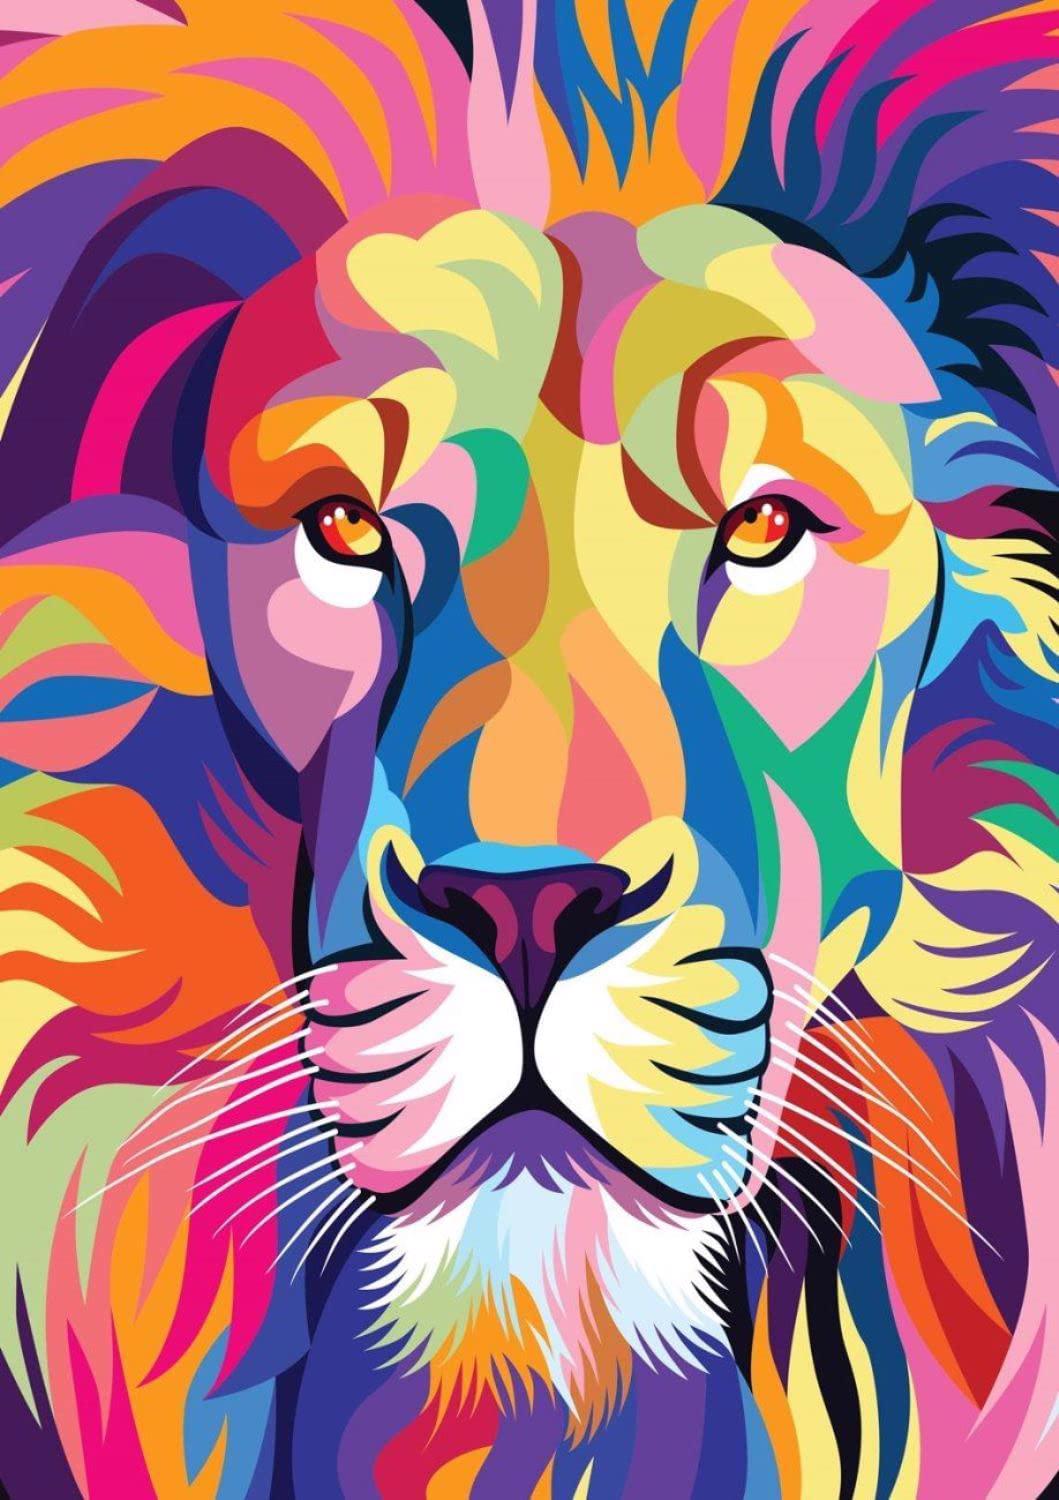 Puzzle Leão colorido 1000